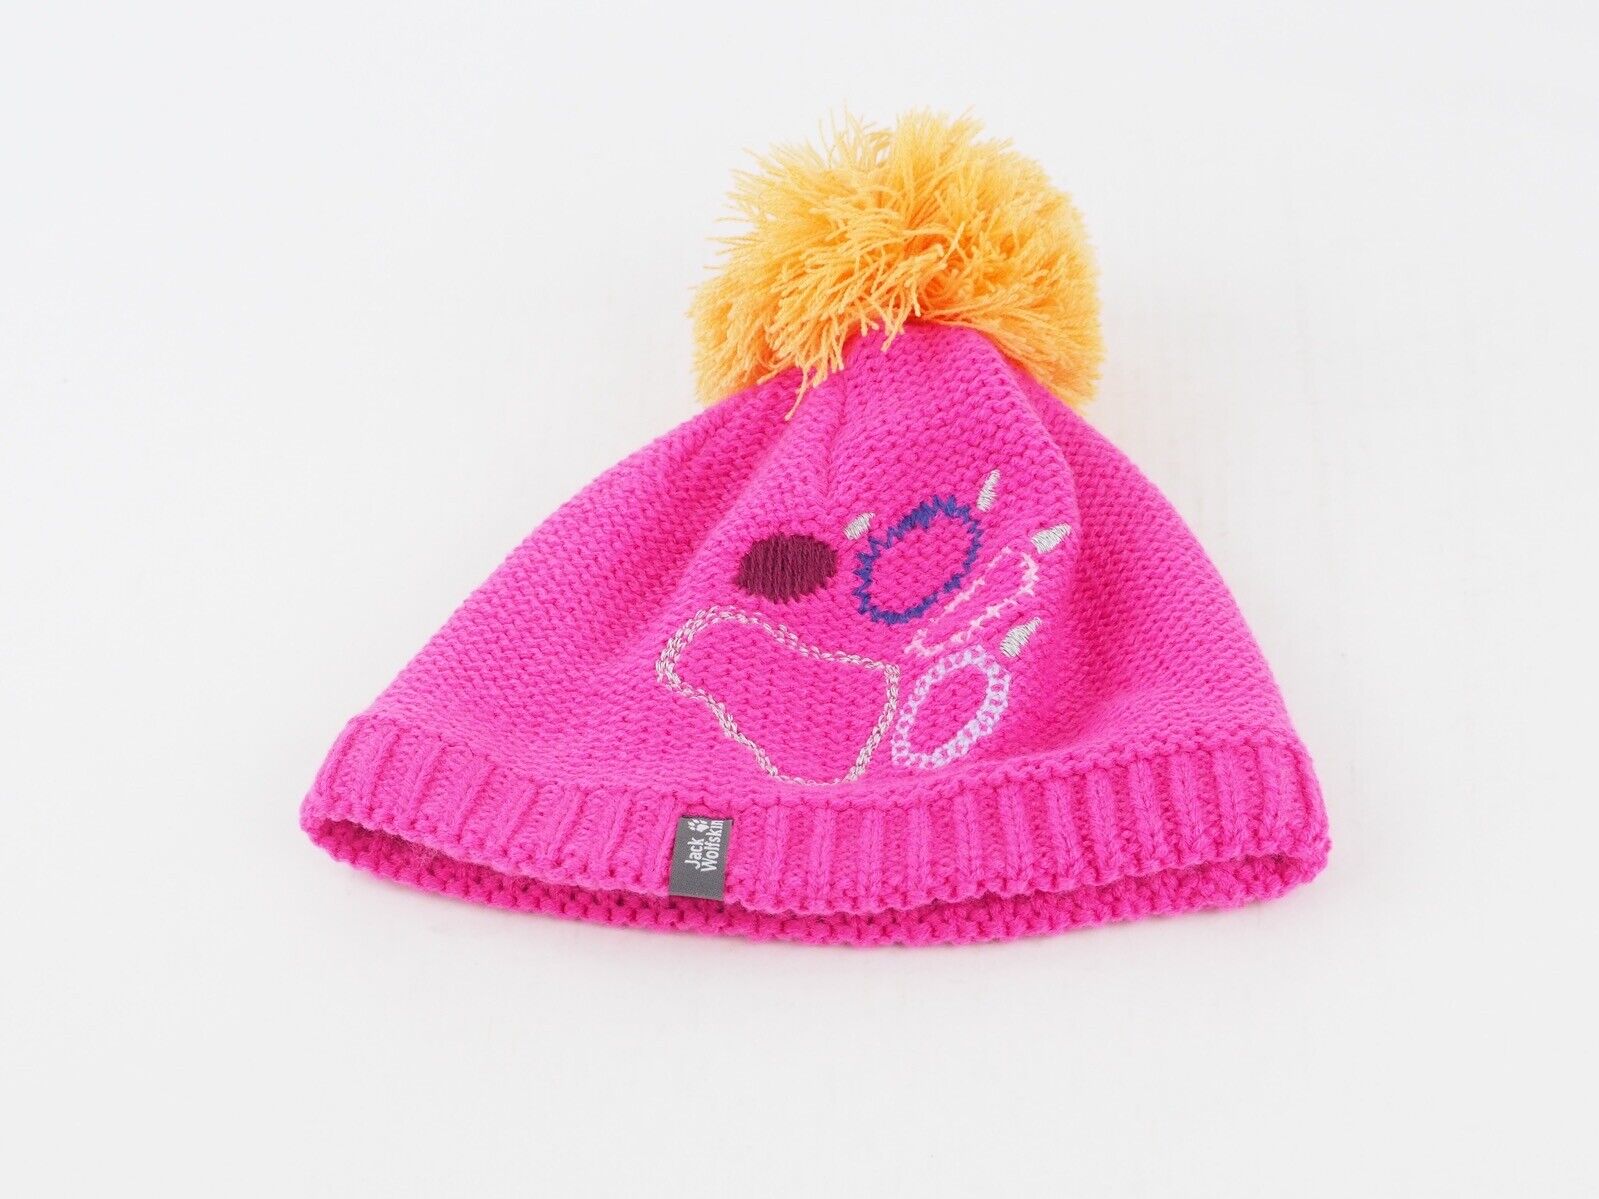 Girls Jack Wolfskin Paw Print Knit Cap Pink Warm Winter Hat With A Pom Pom - London Top Style